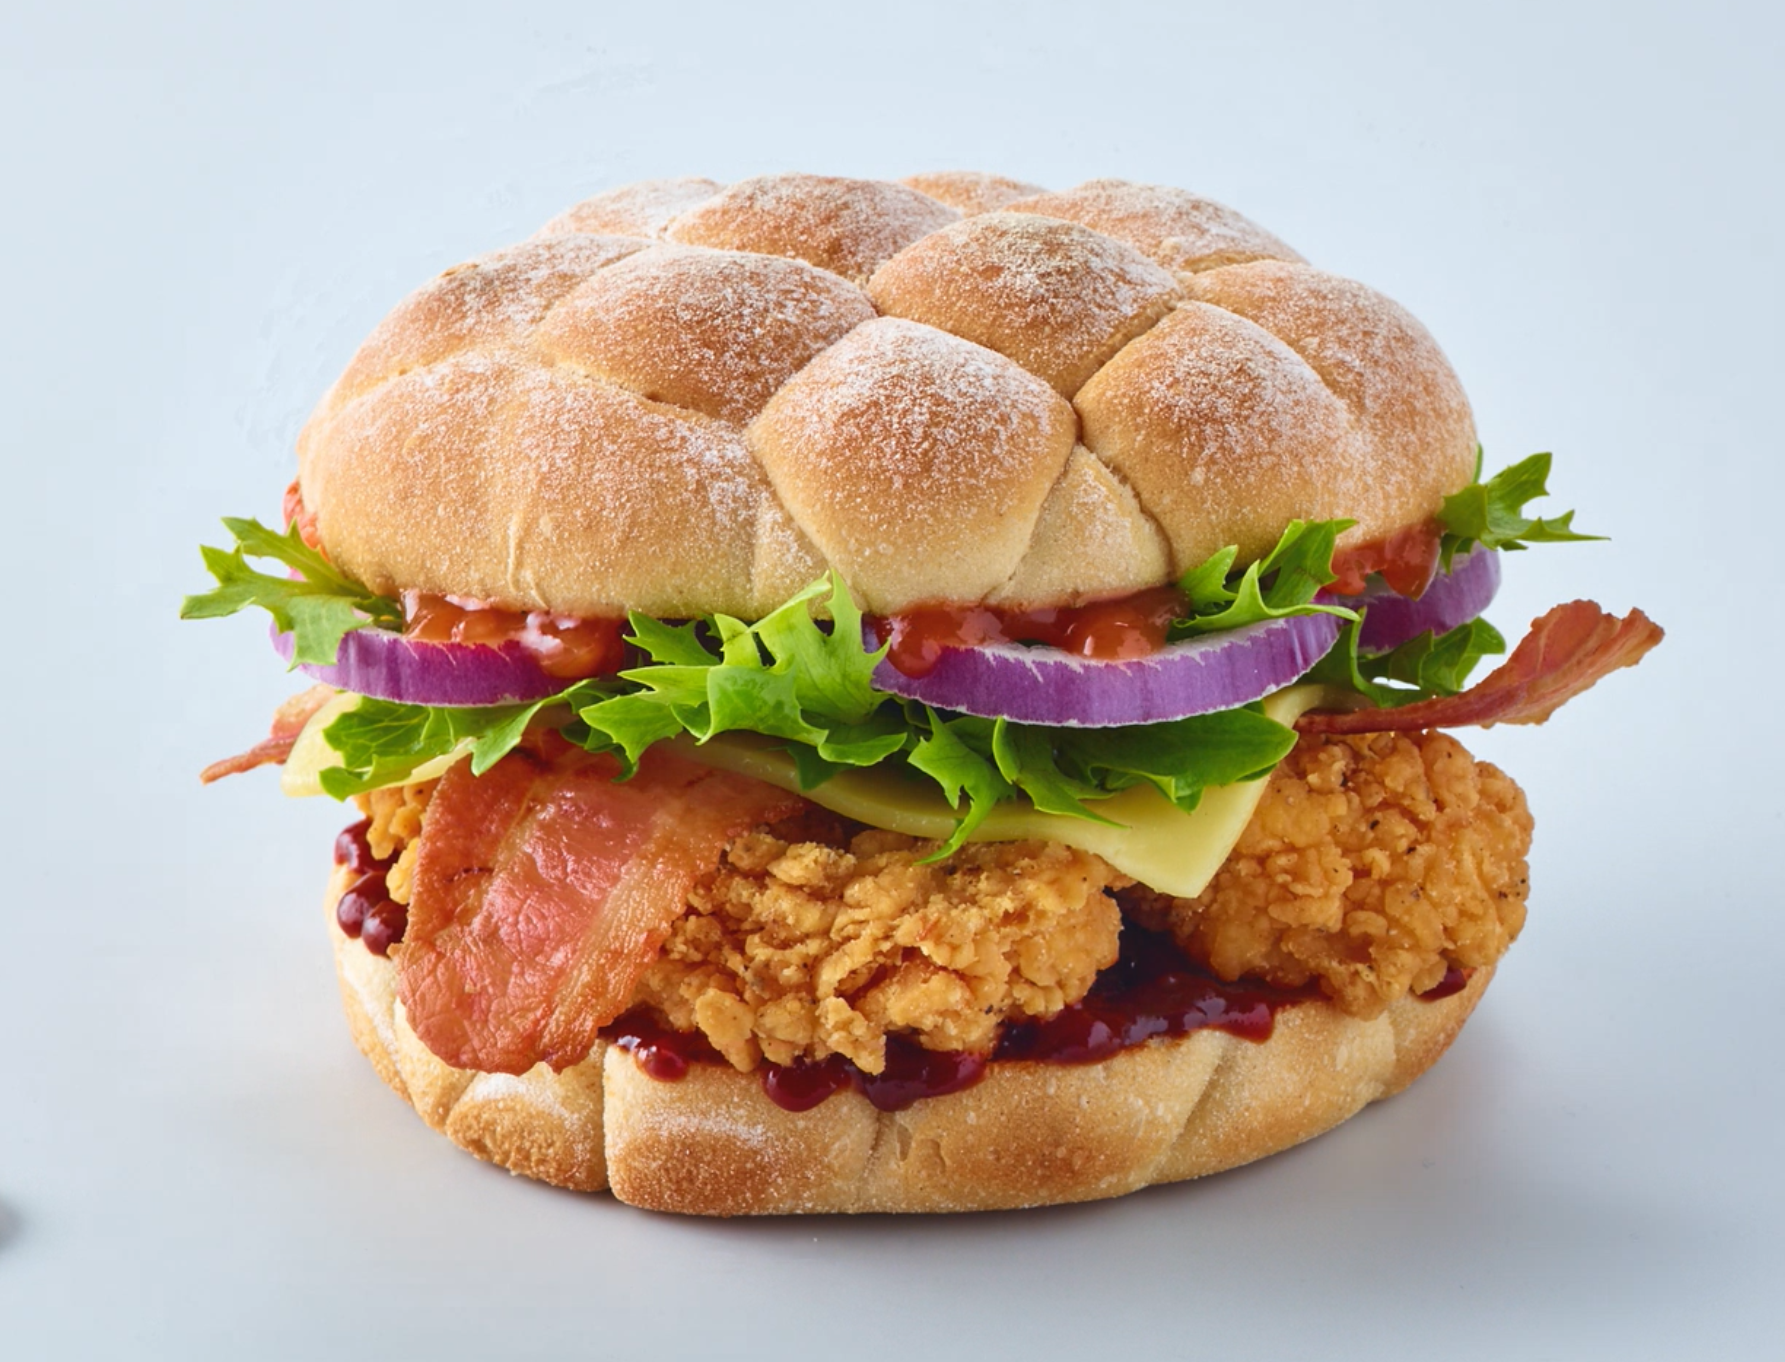 The Chicken BBQ Smokehouse Burger will return to UK restaurants from Wednesday